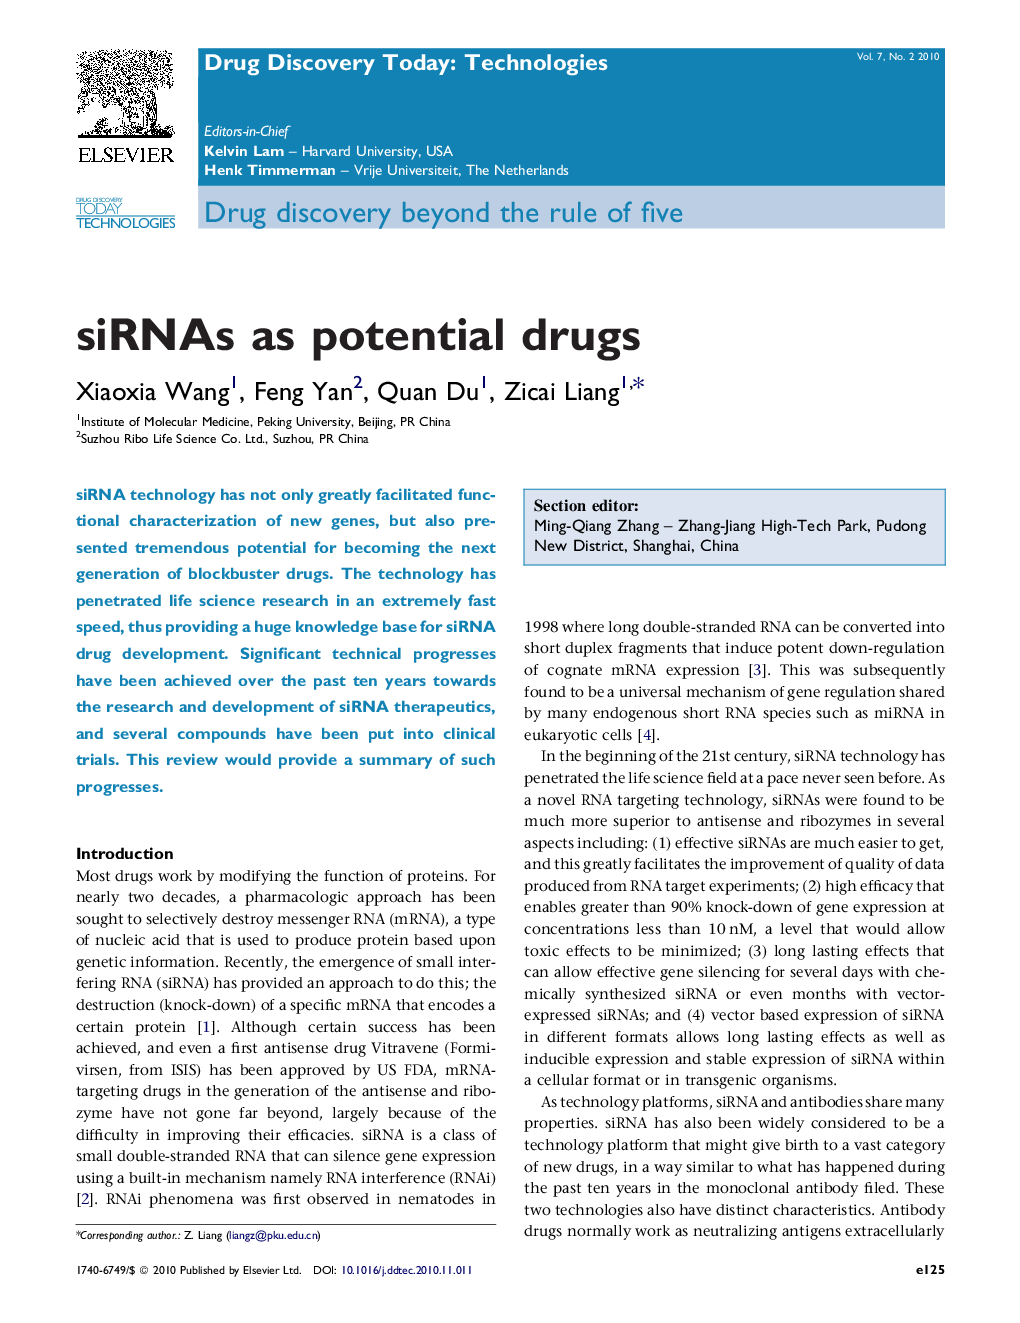 siRNAs as potential drugs